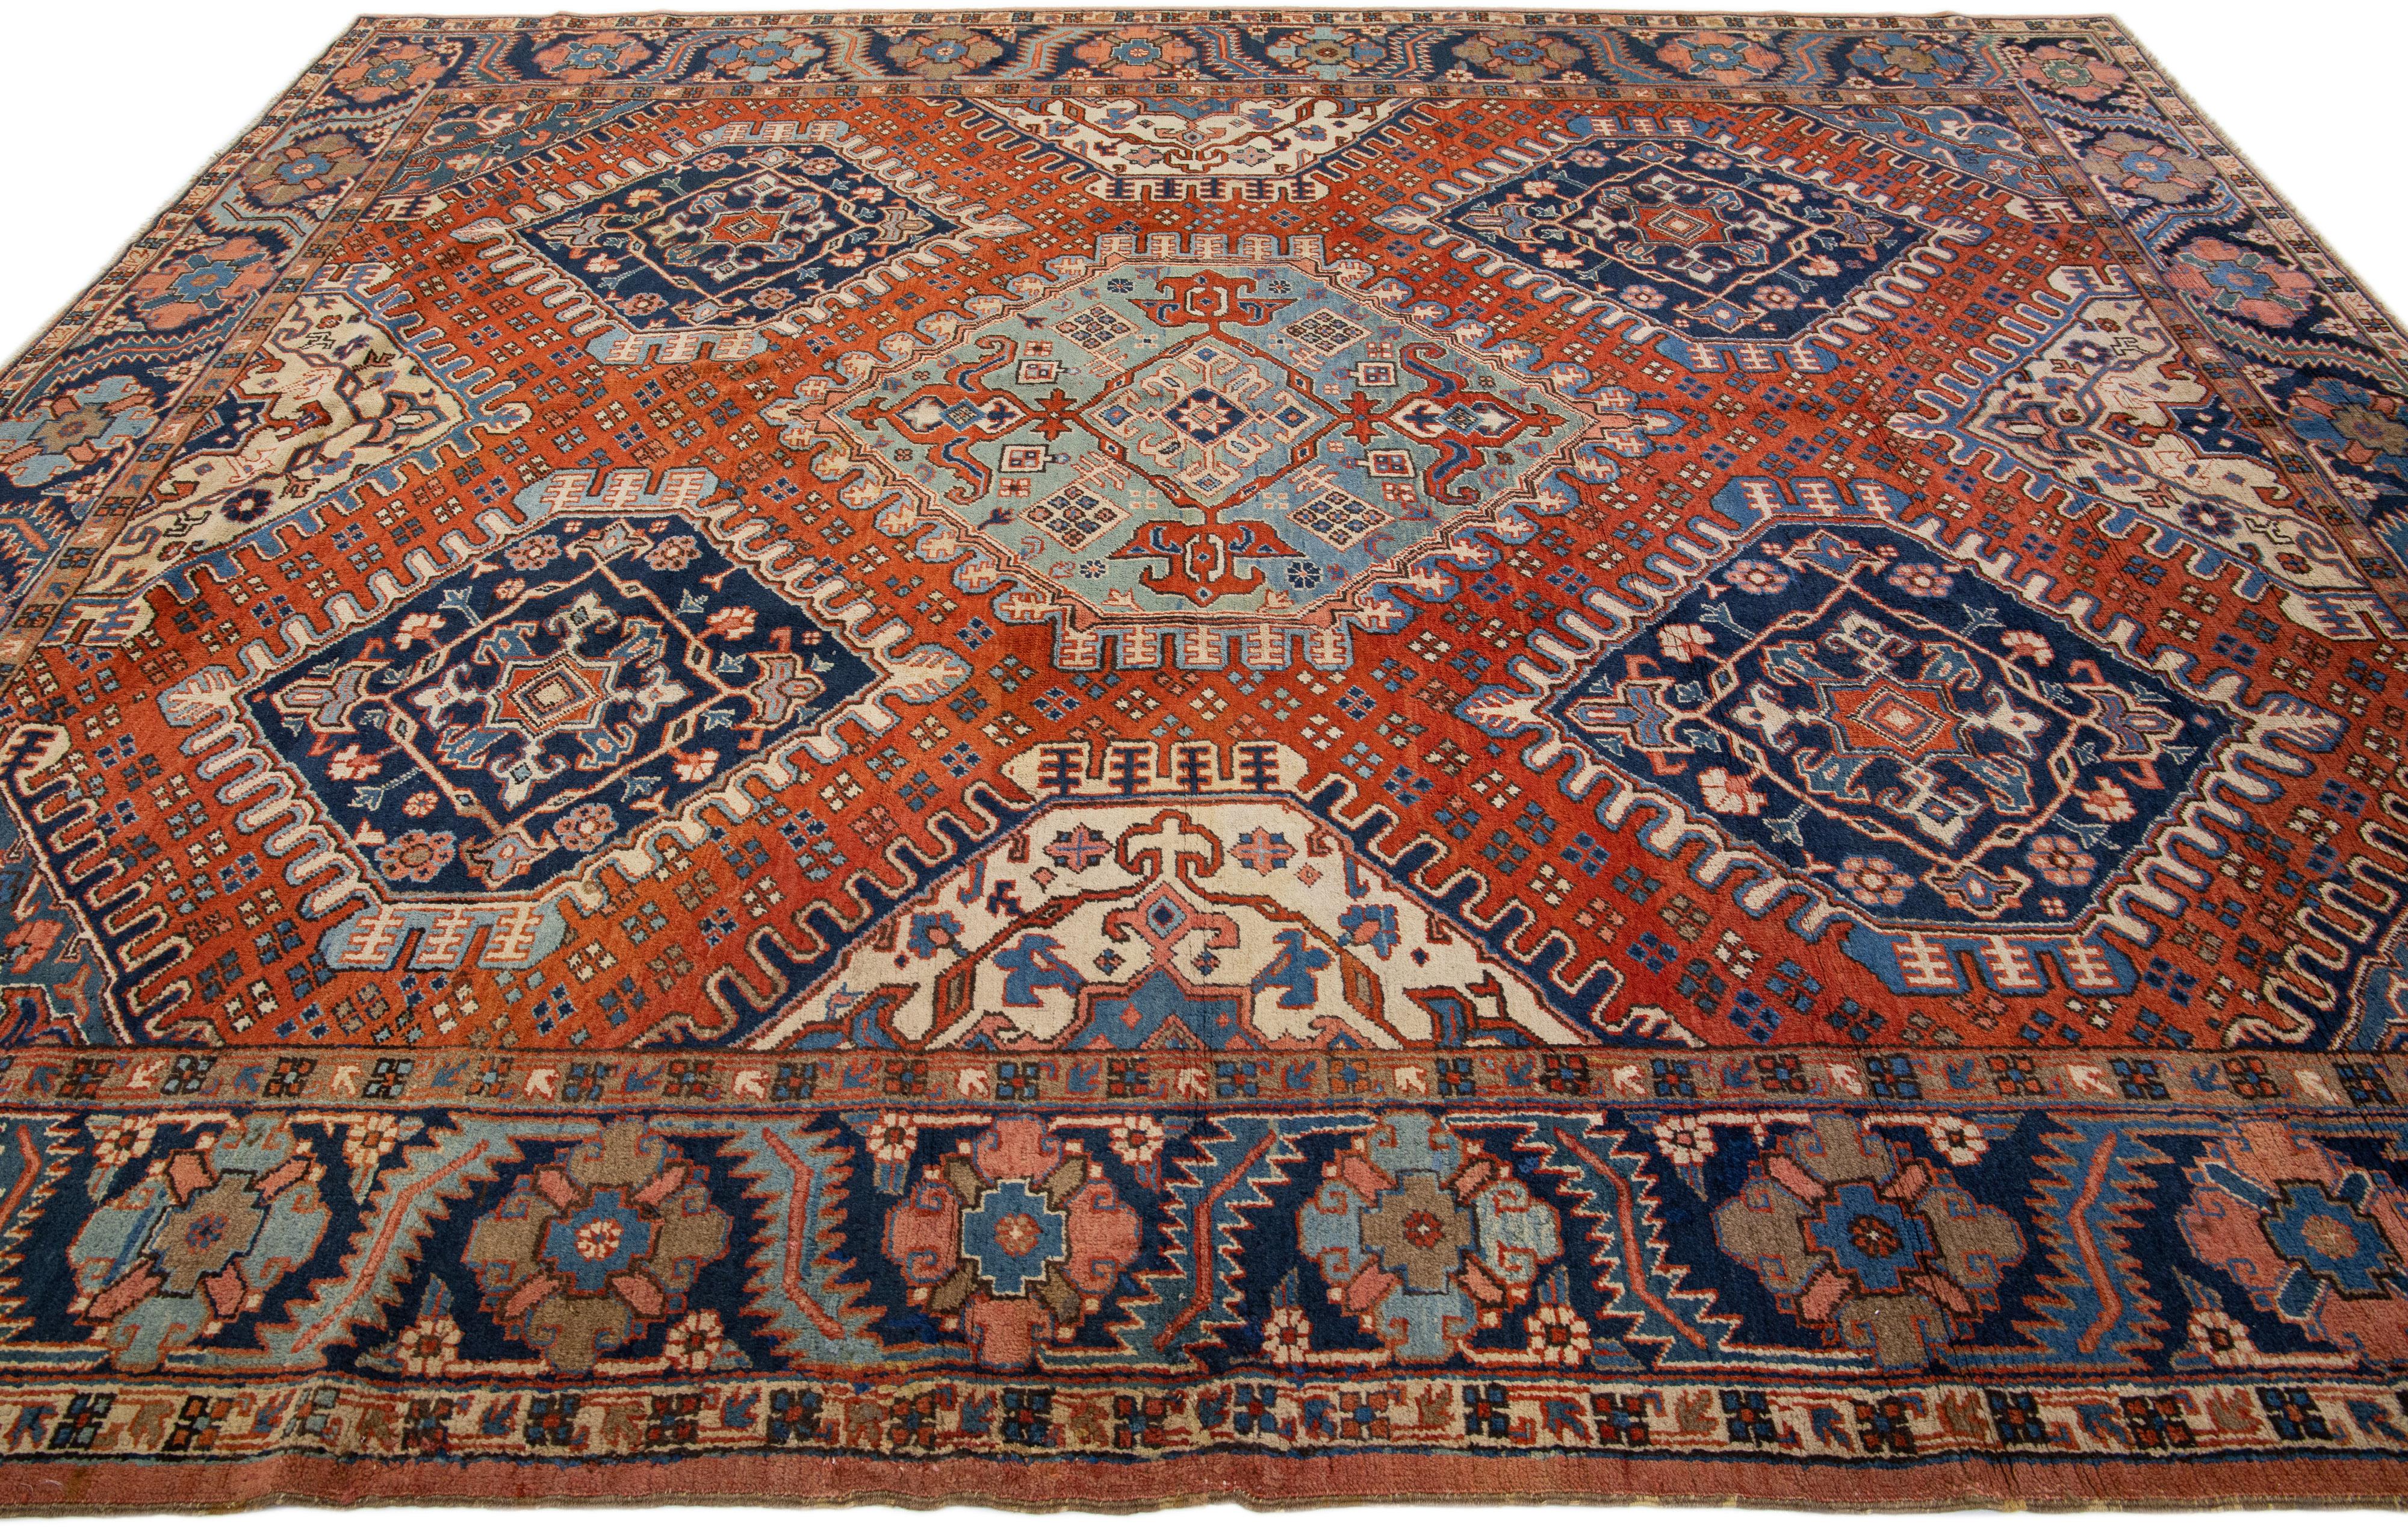  Antique Geometric Persian Heriz Handmade Wool Rug with Orange Rust Field In Good Condition For Sale In Norwalk, CT